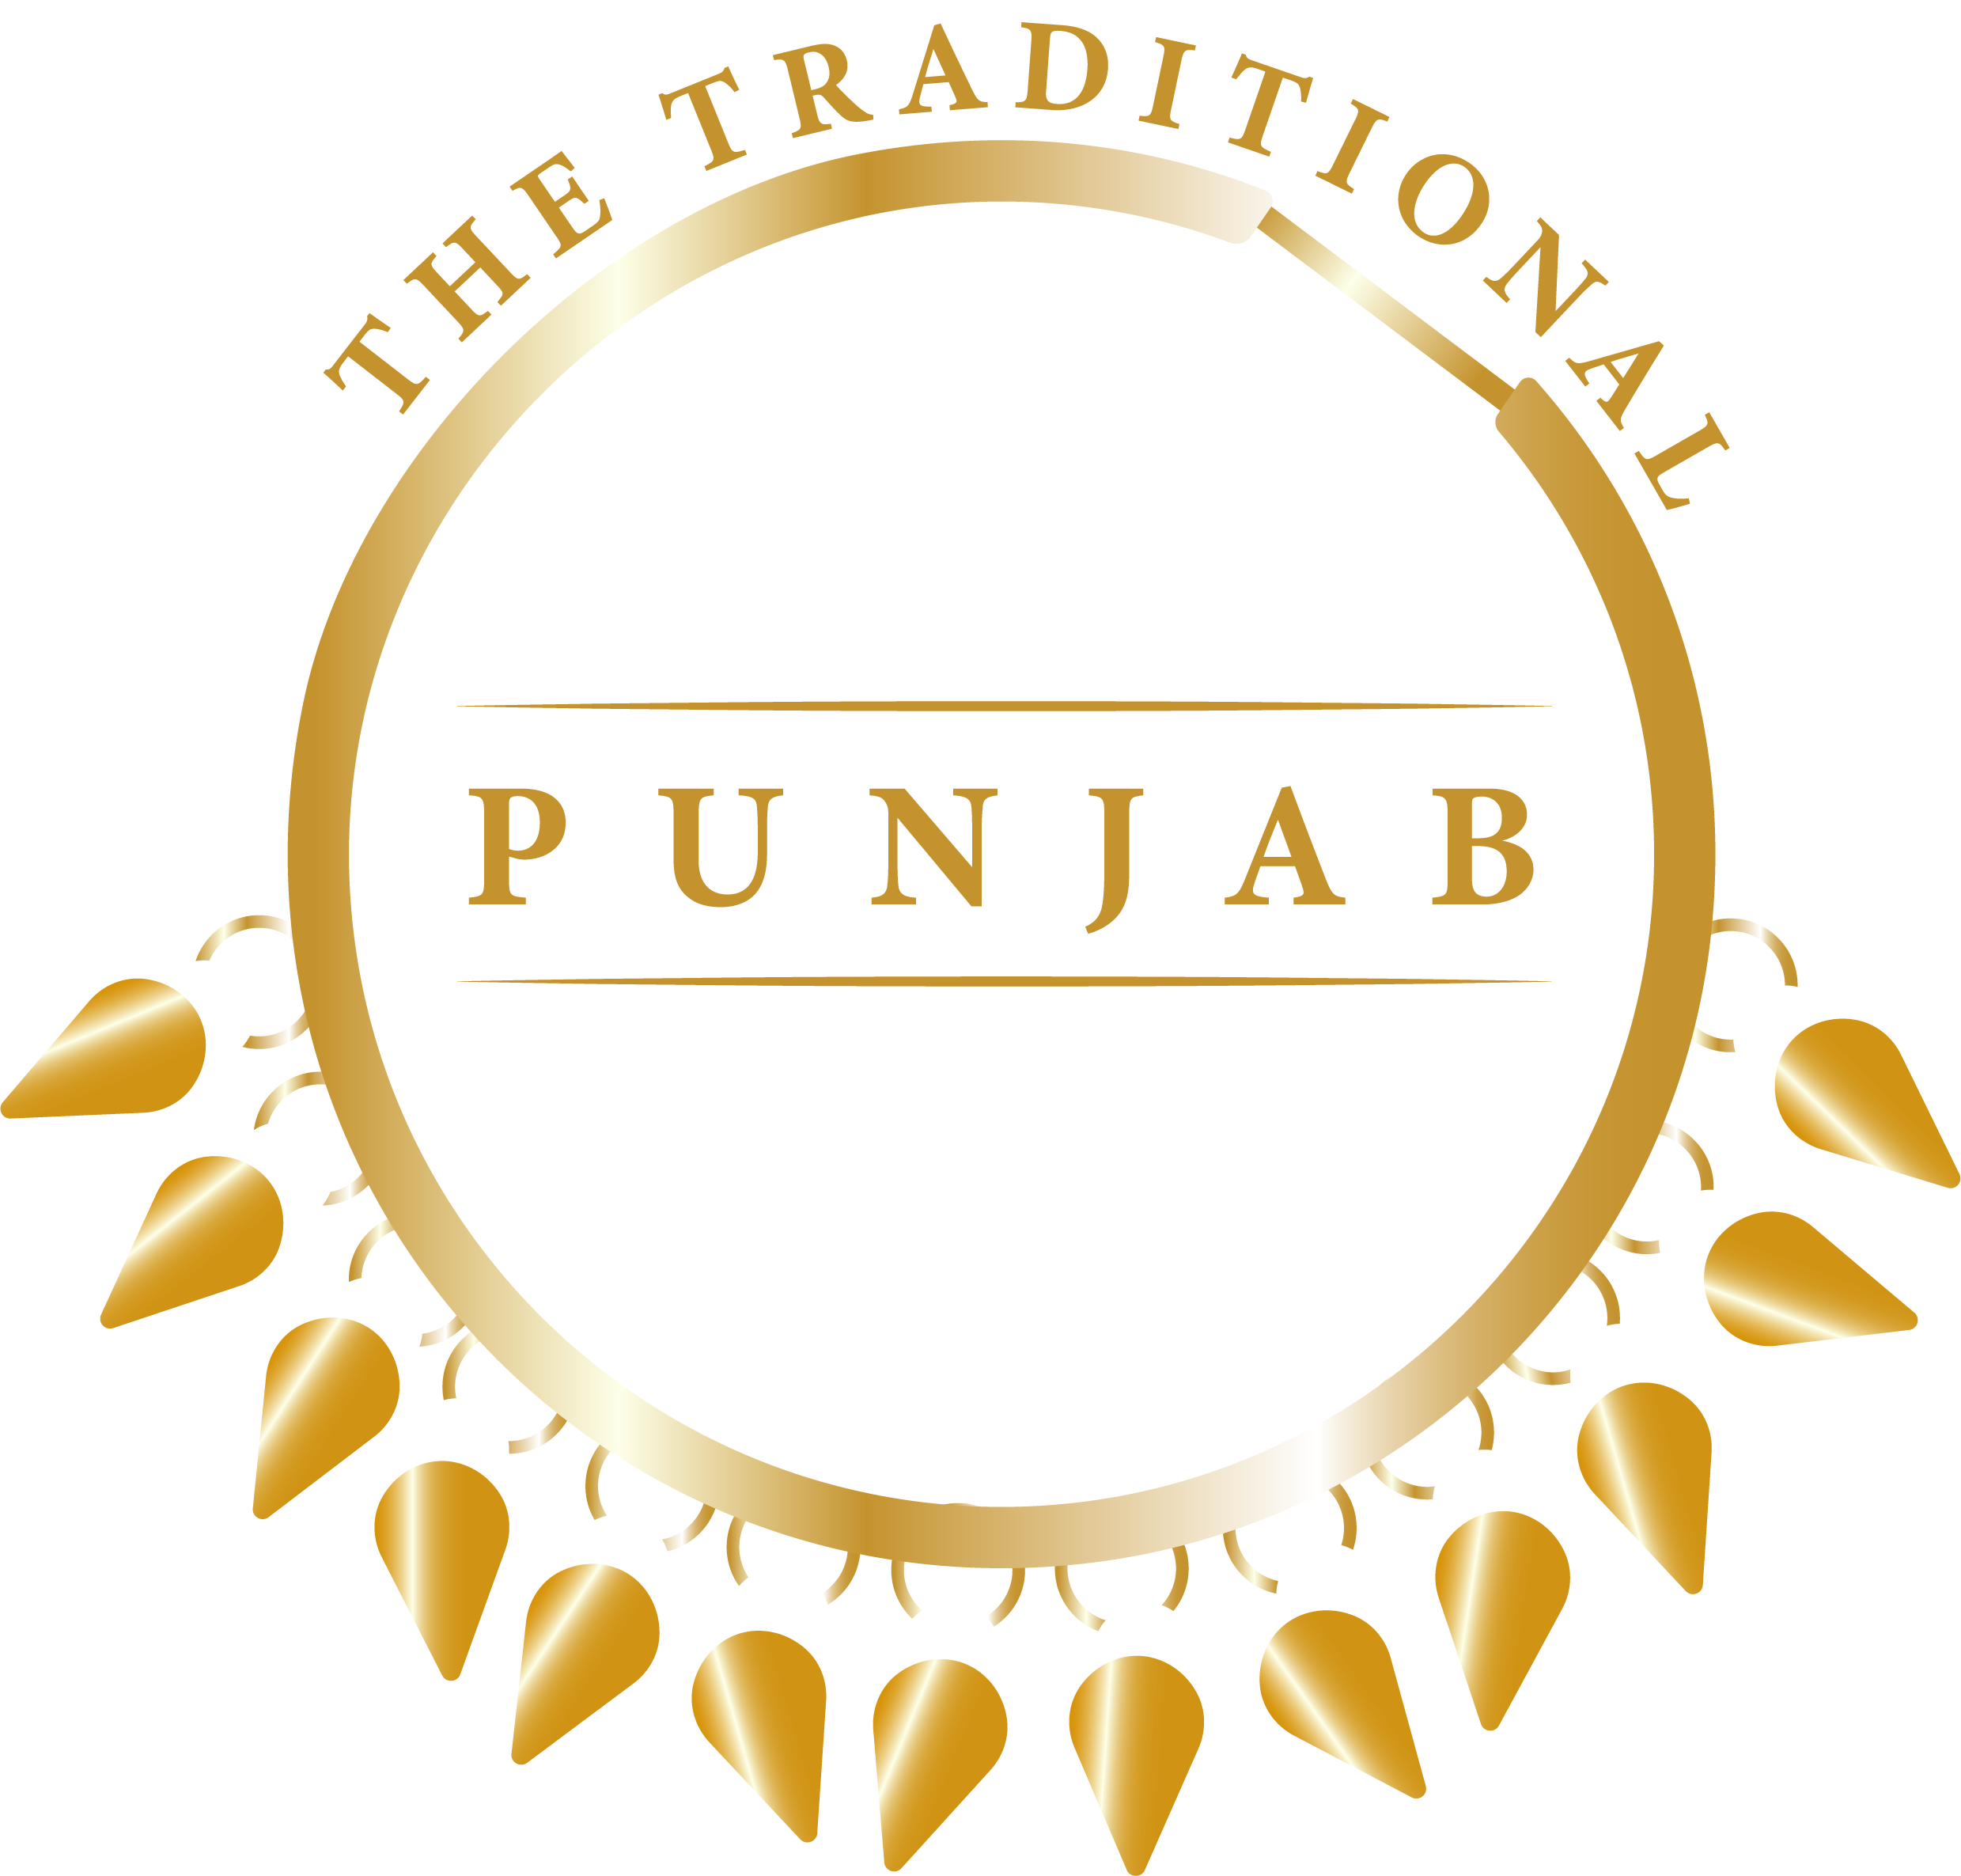 The Traditional Punjab